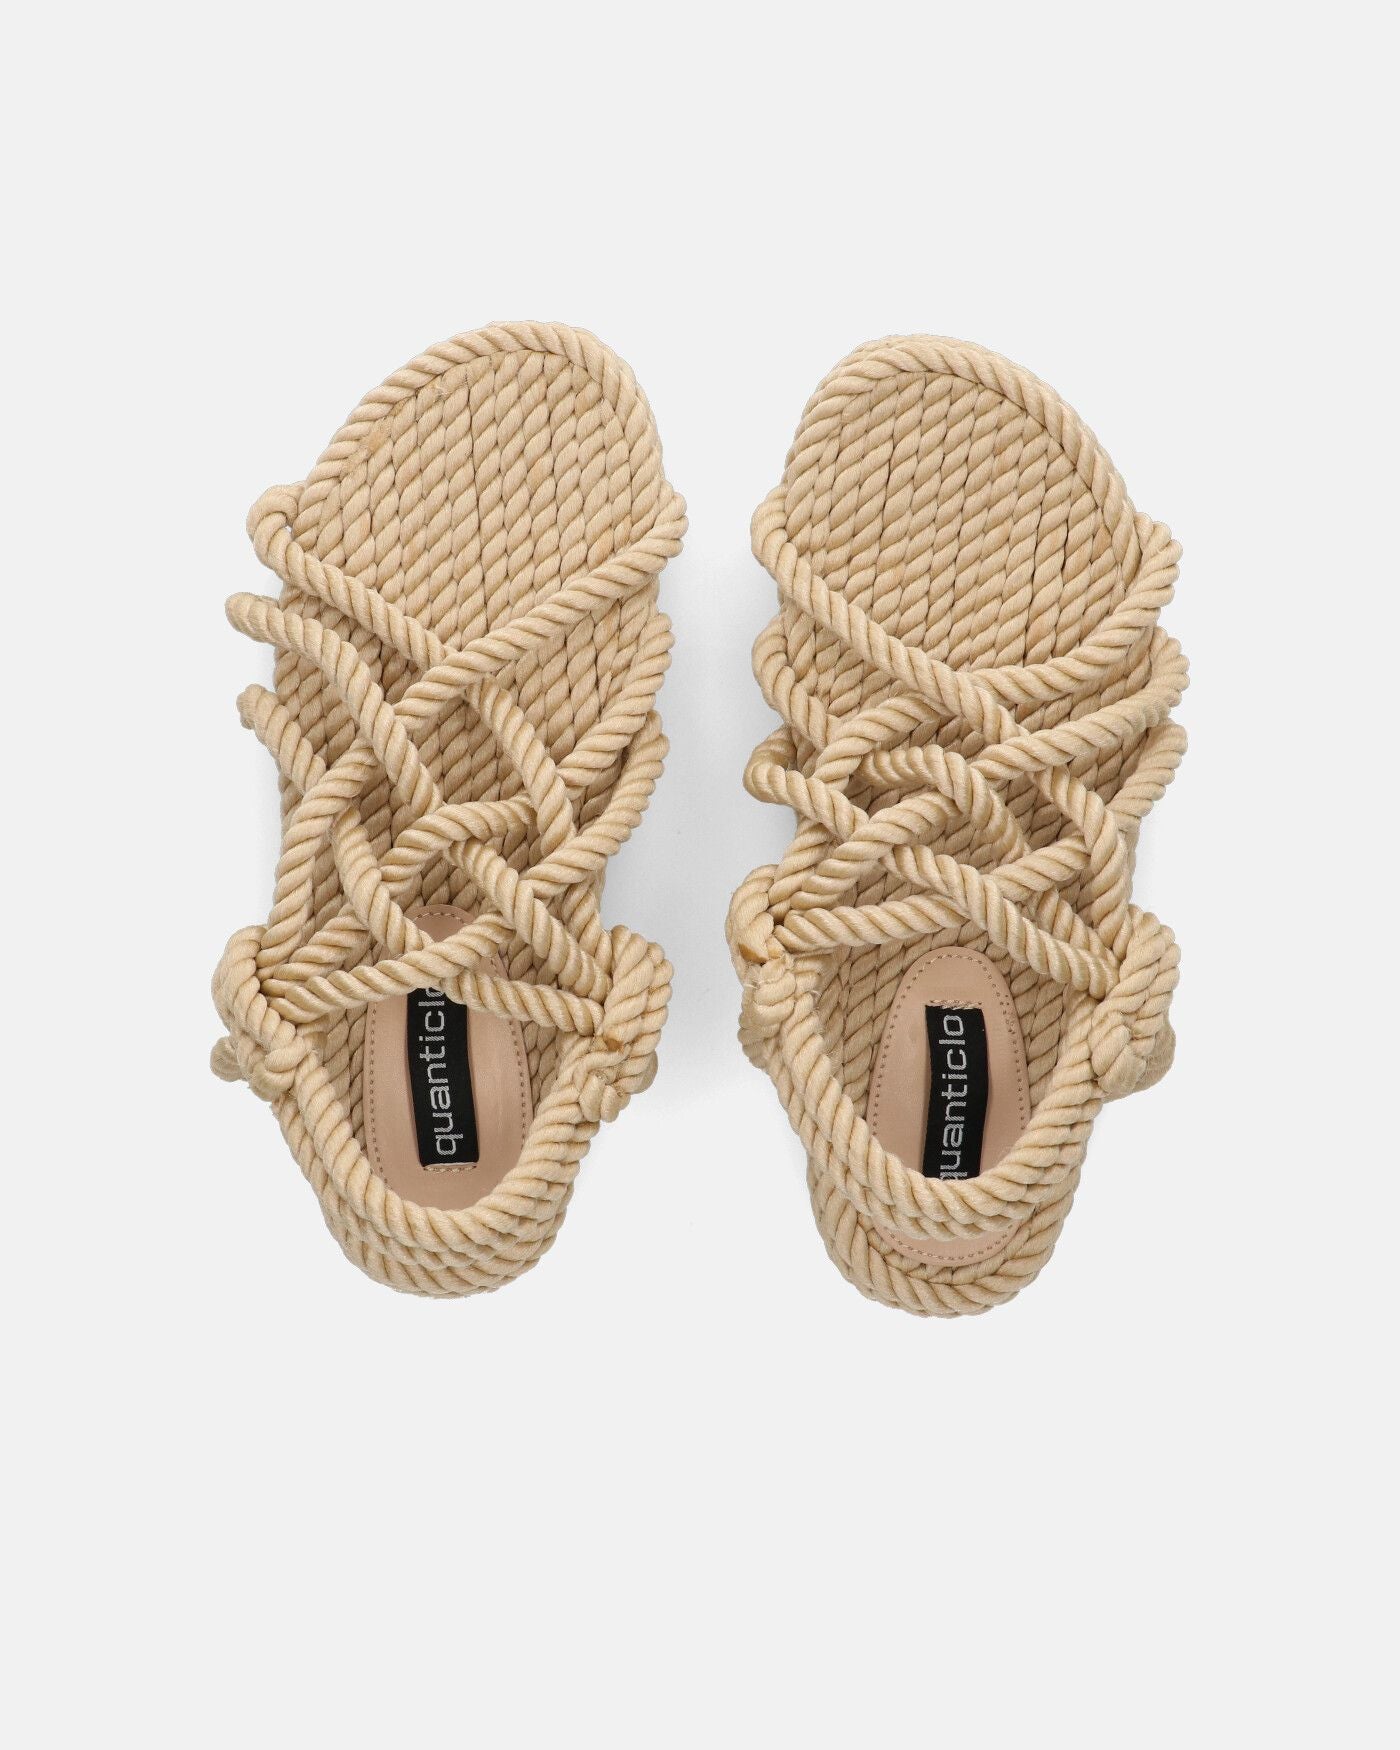 KATERYNA - beige braided rope sandals